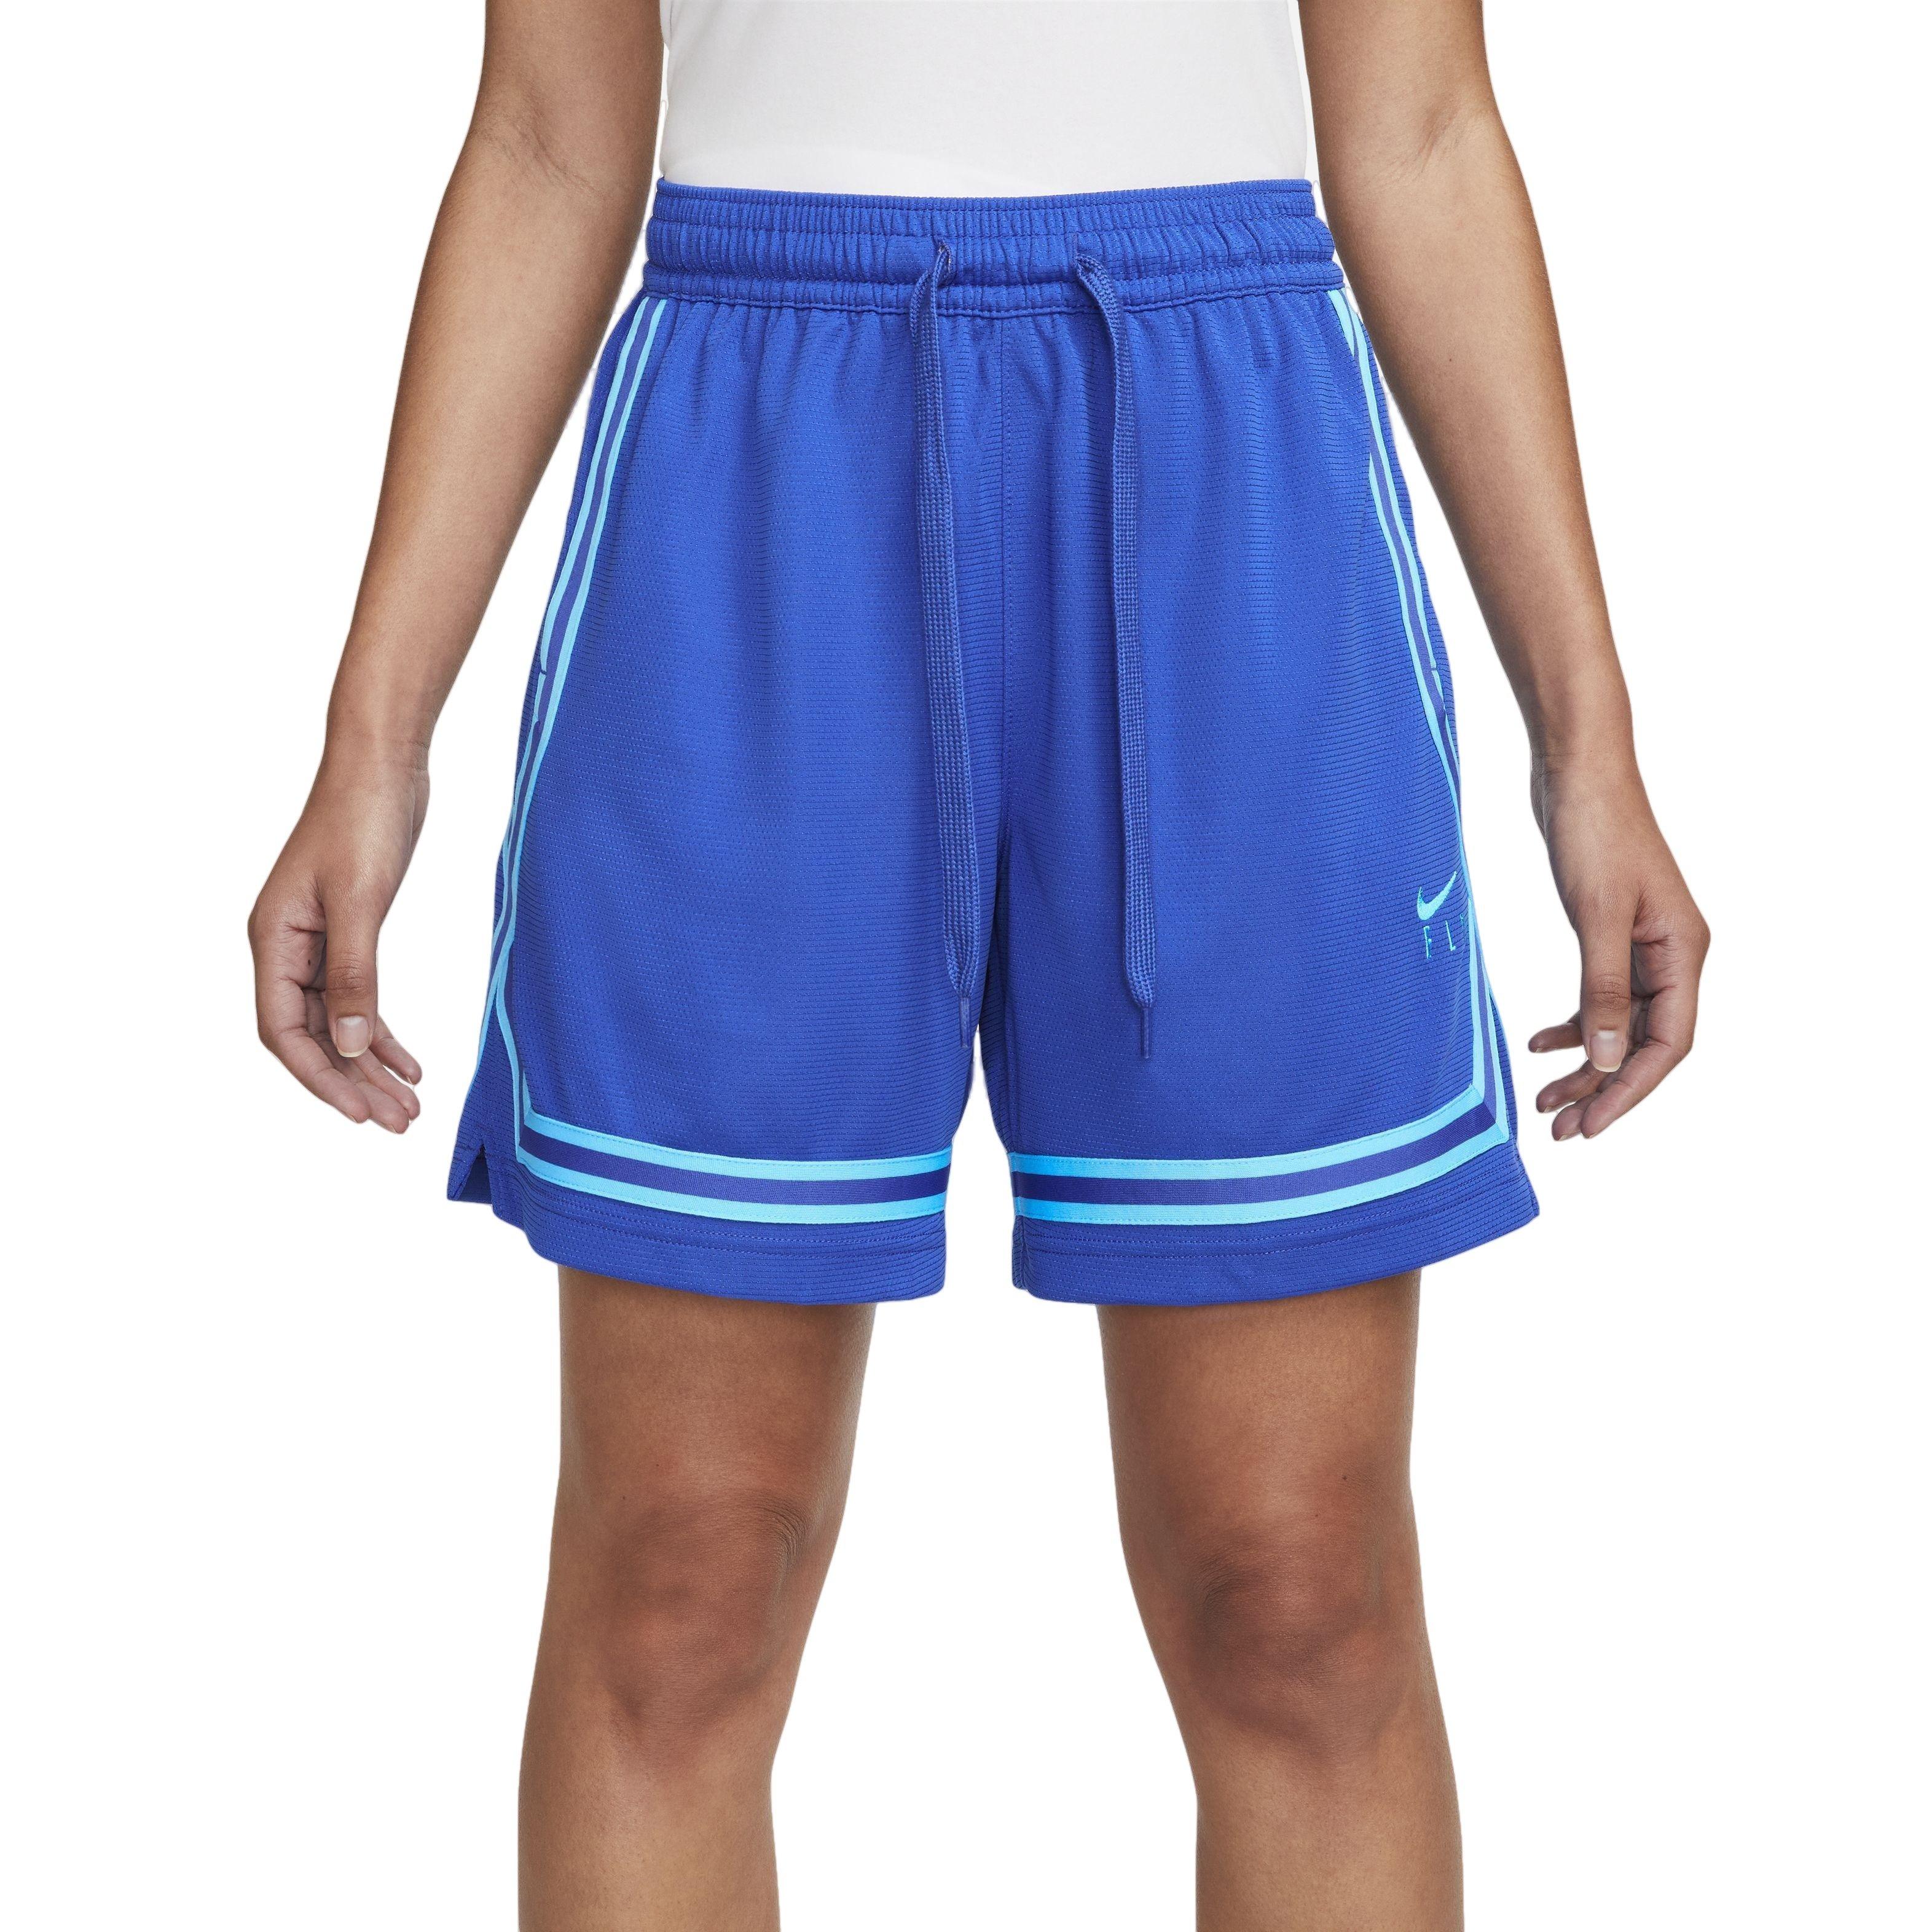 Nike Women's Fly Crossover Basketball Shorts, XS, Black